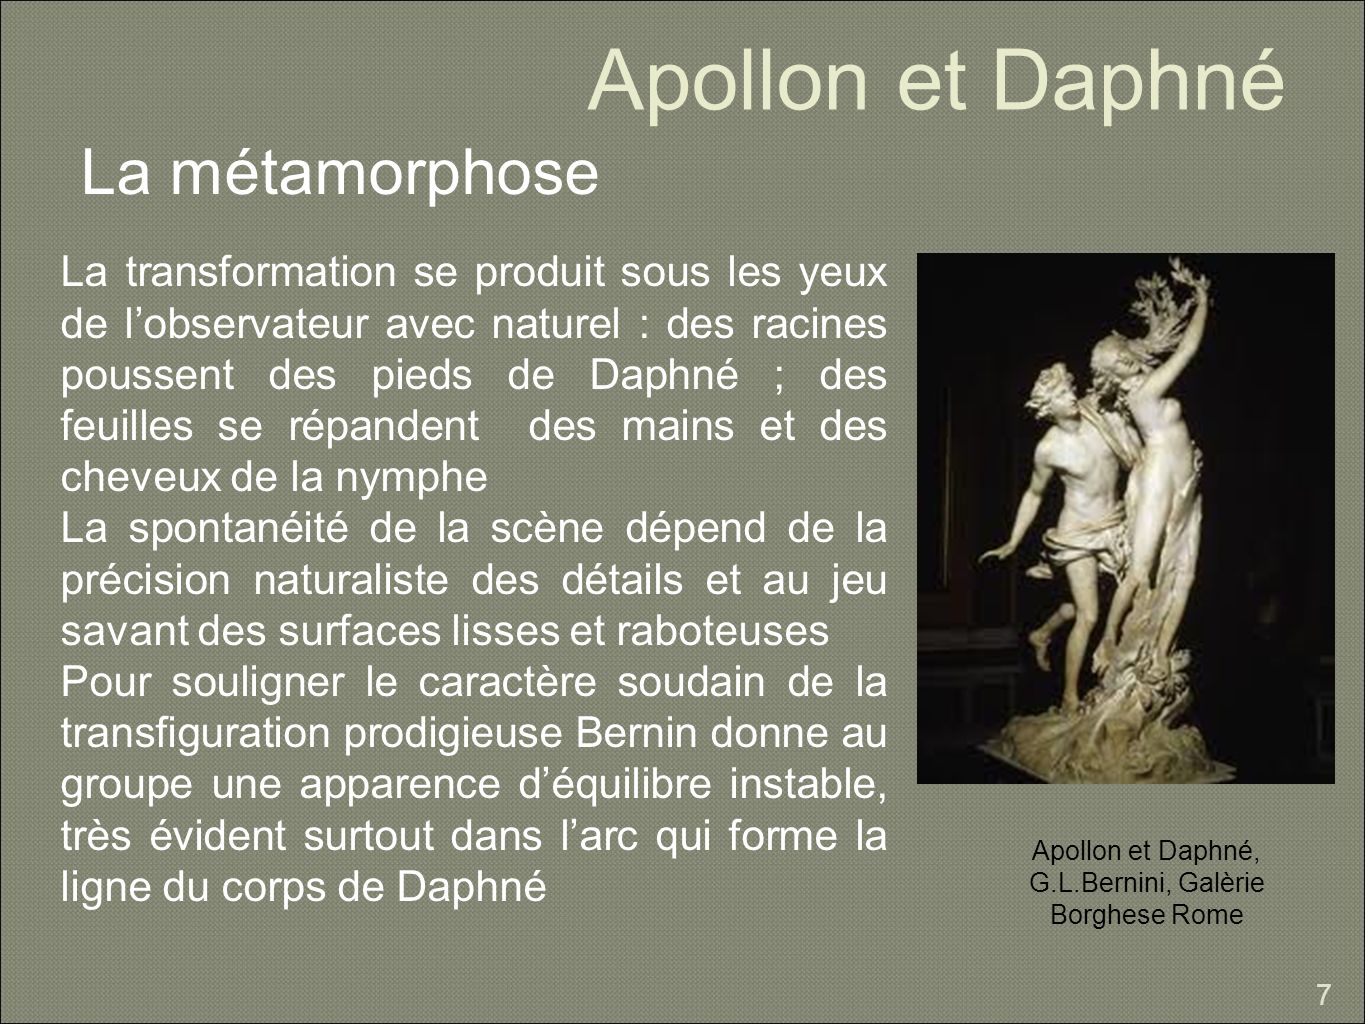 Apollon et Daphné, G.L.Bernini, Galèrie Borghese Rome